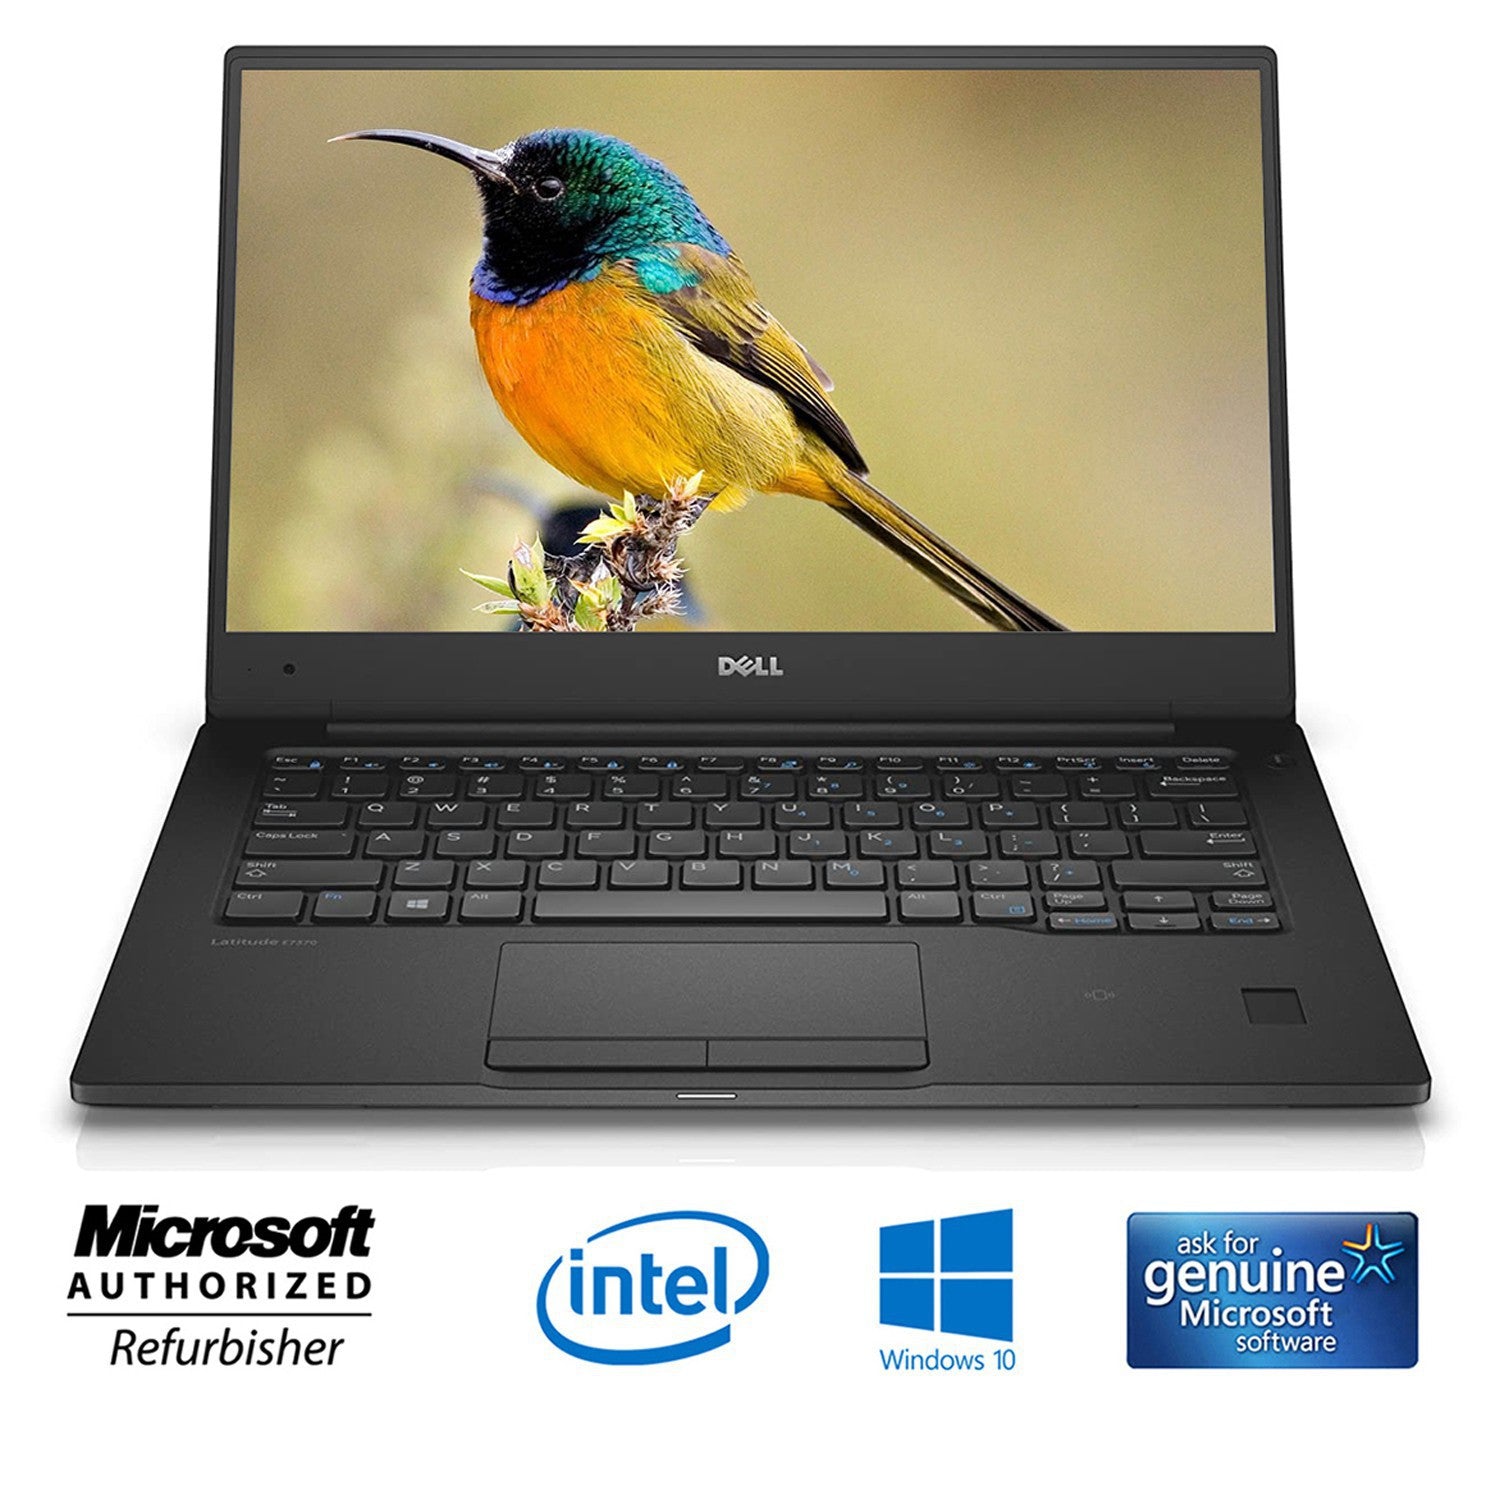 Dell Latitude 7370 13.3” FHD (1920x1080) Business Laptop Intel Core M7-6Y75, 8GB RAM-512GB SSD (Type C Port, Mini HDMI) Win 10 Pro, Refurbished